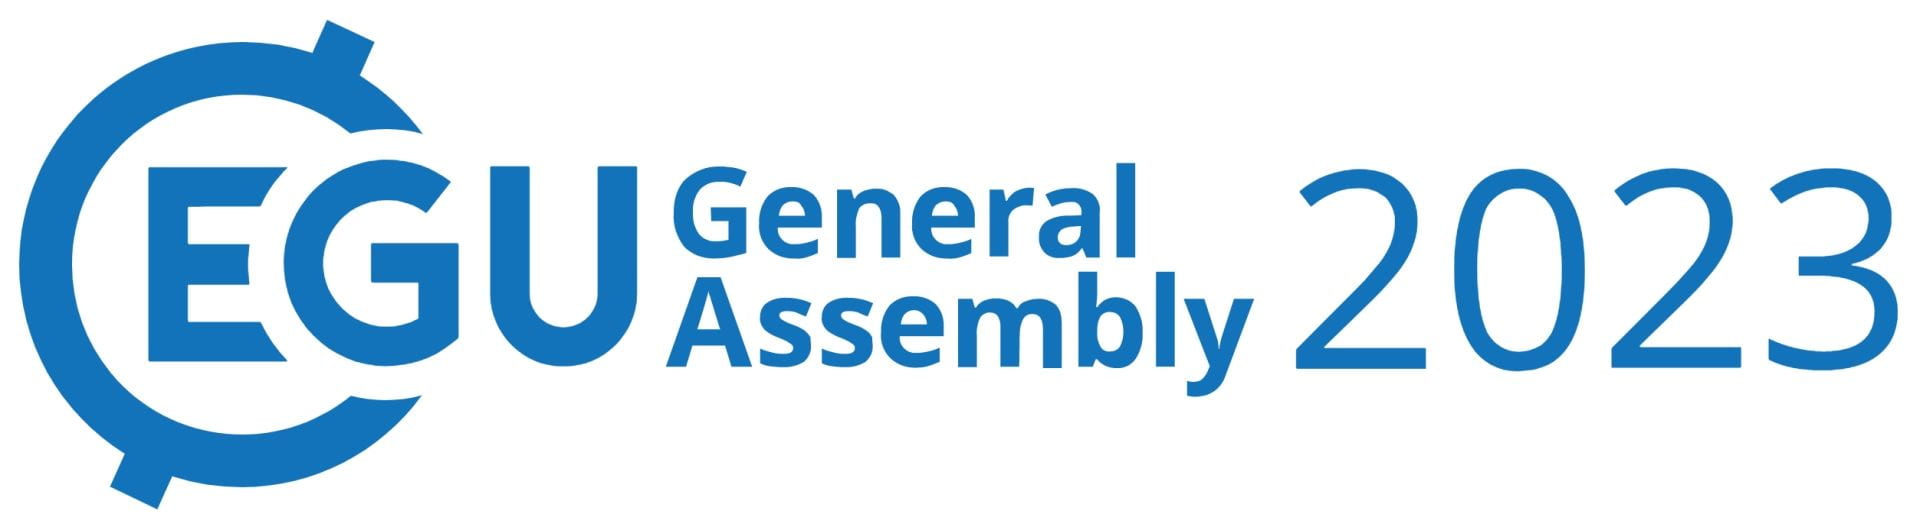 EGU general assembly 2023 logo